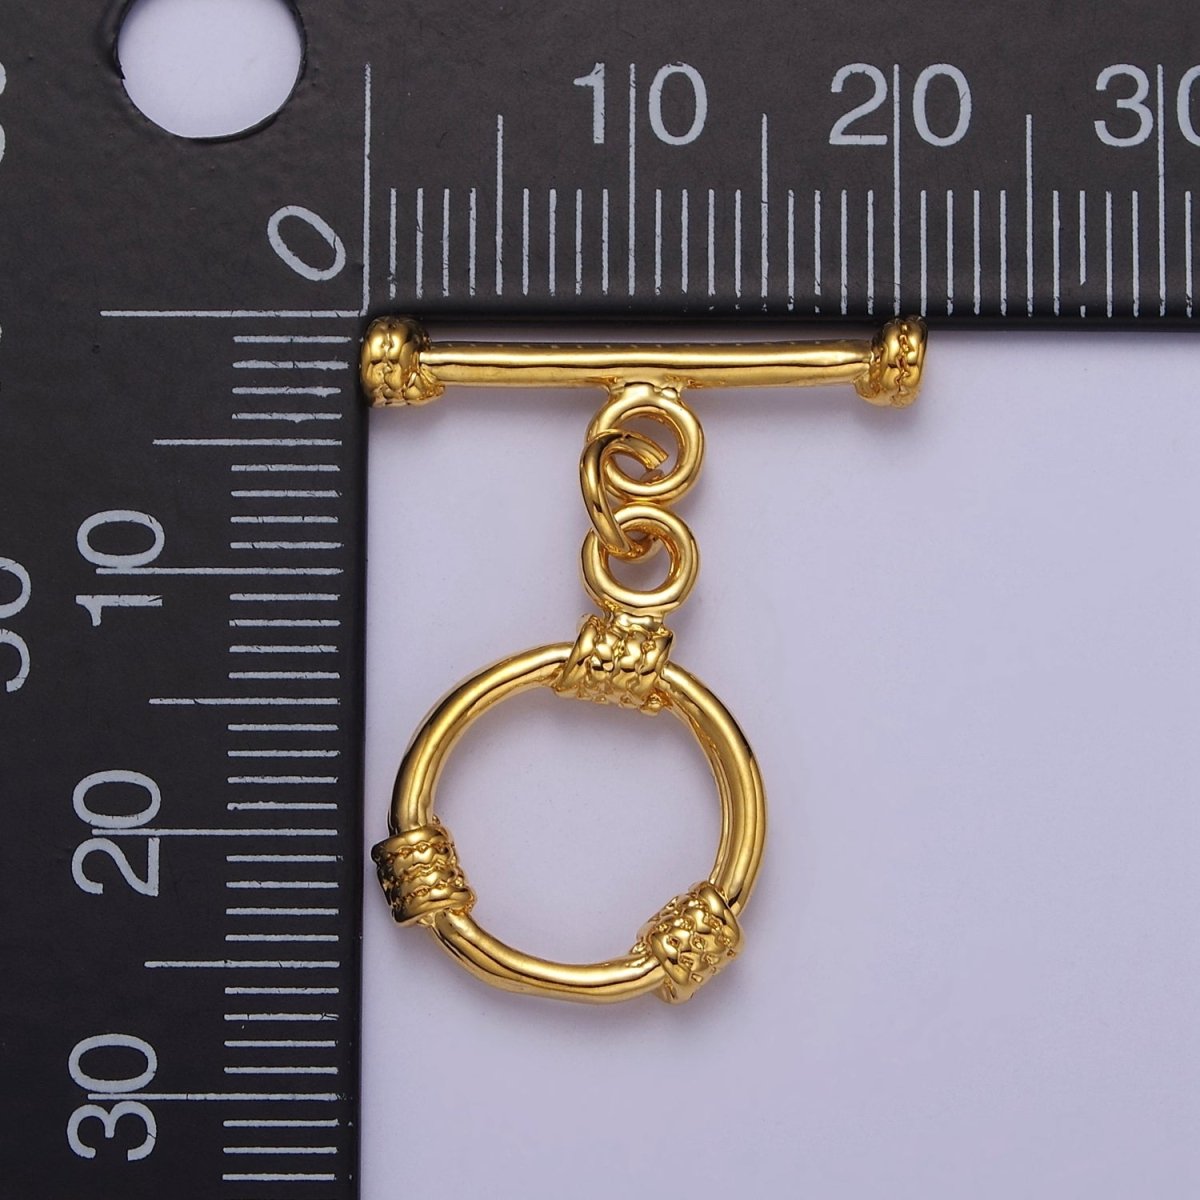 24k Gold Filled Round Toggle Clasp, Jewelry Clasp OT Clasp Findings L-693 L-694 L-695 - DLUXCA